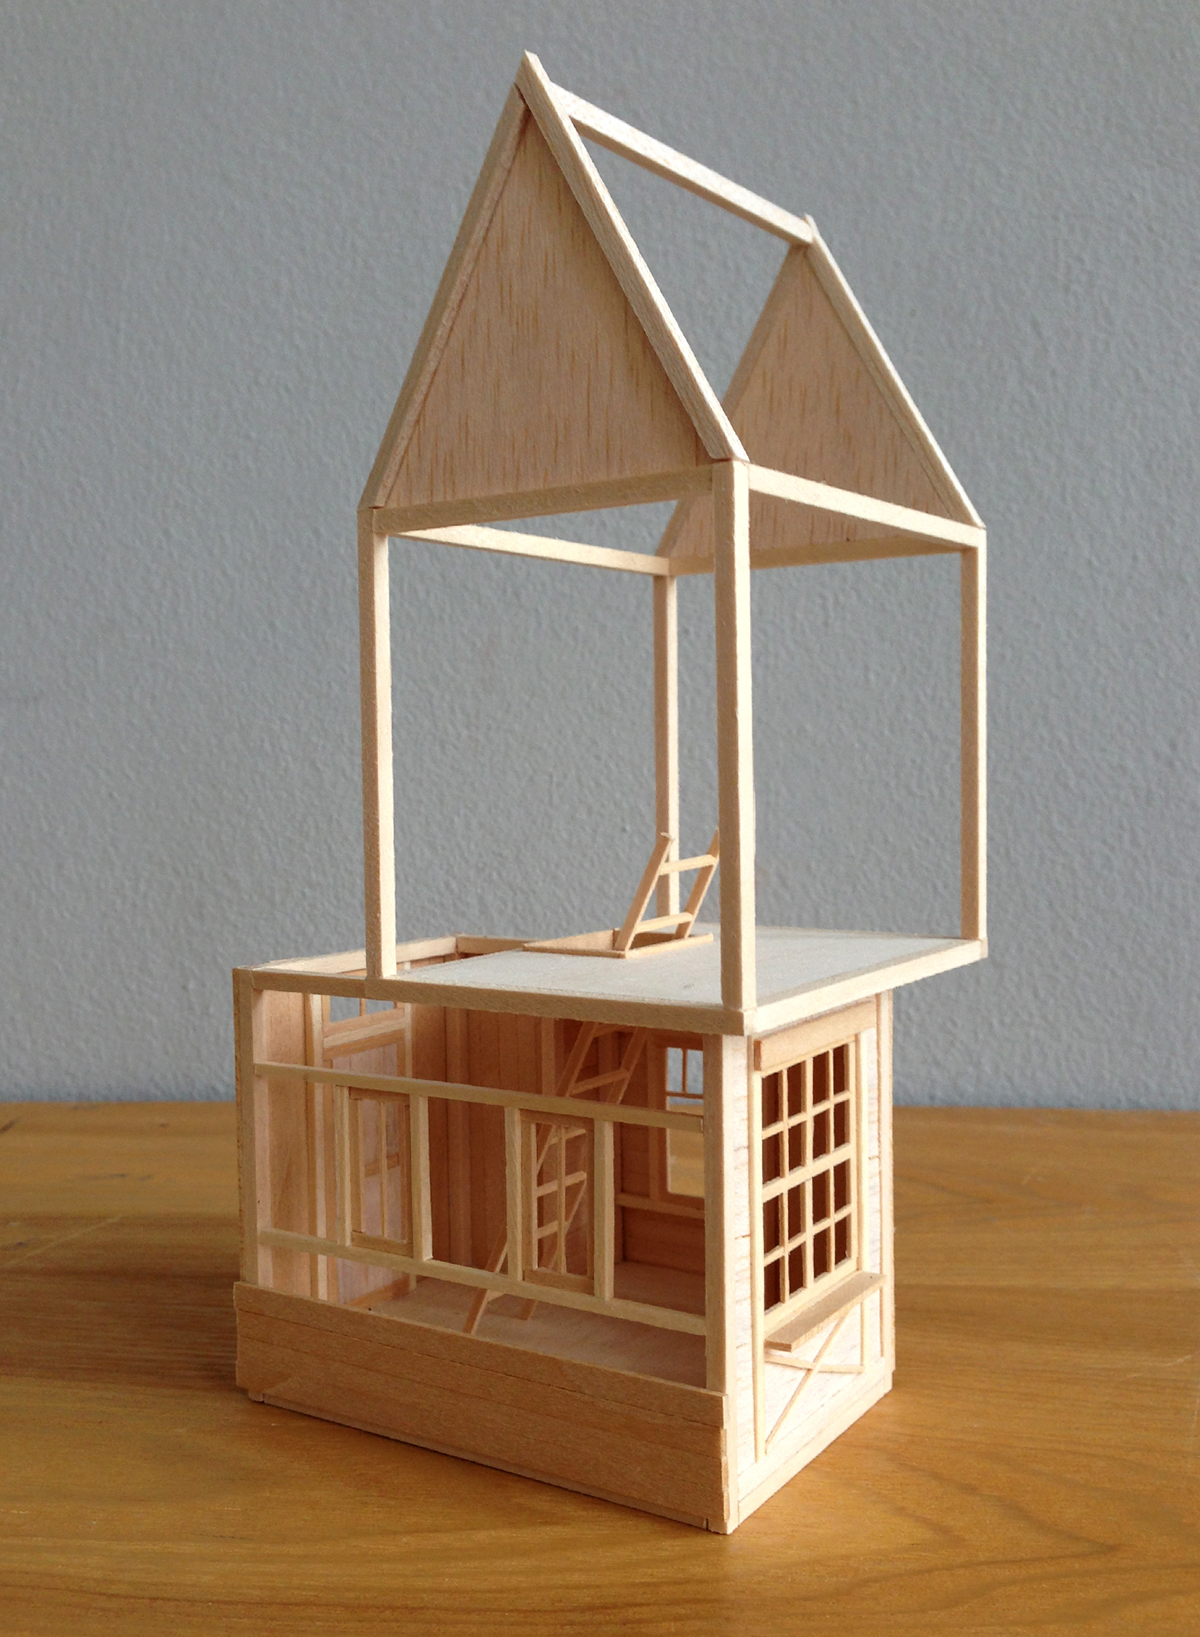 Balsa wood Miniature craft sculpture model architecture houses maquette